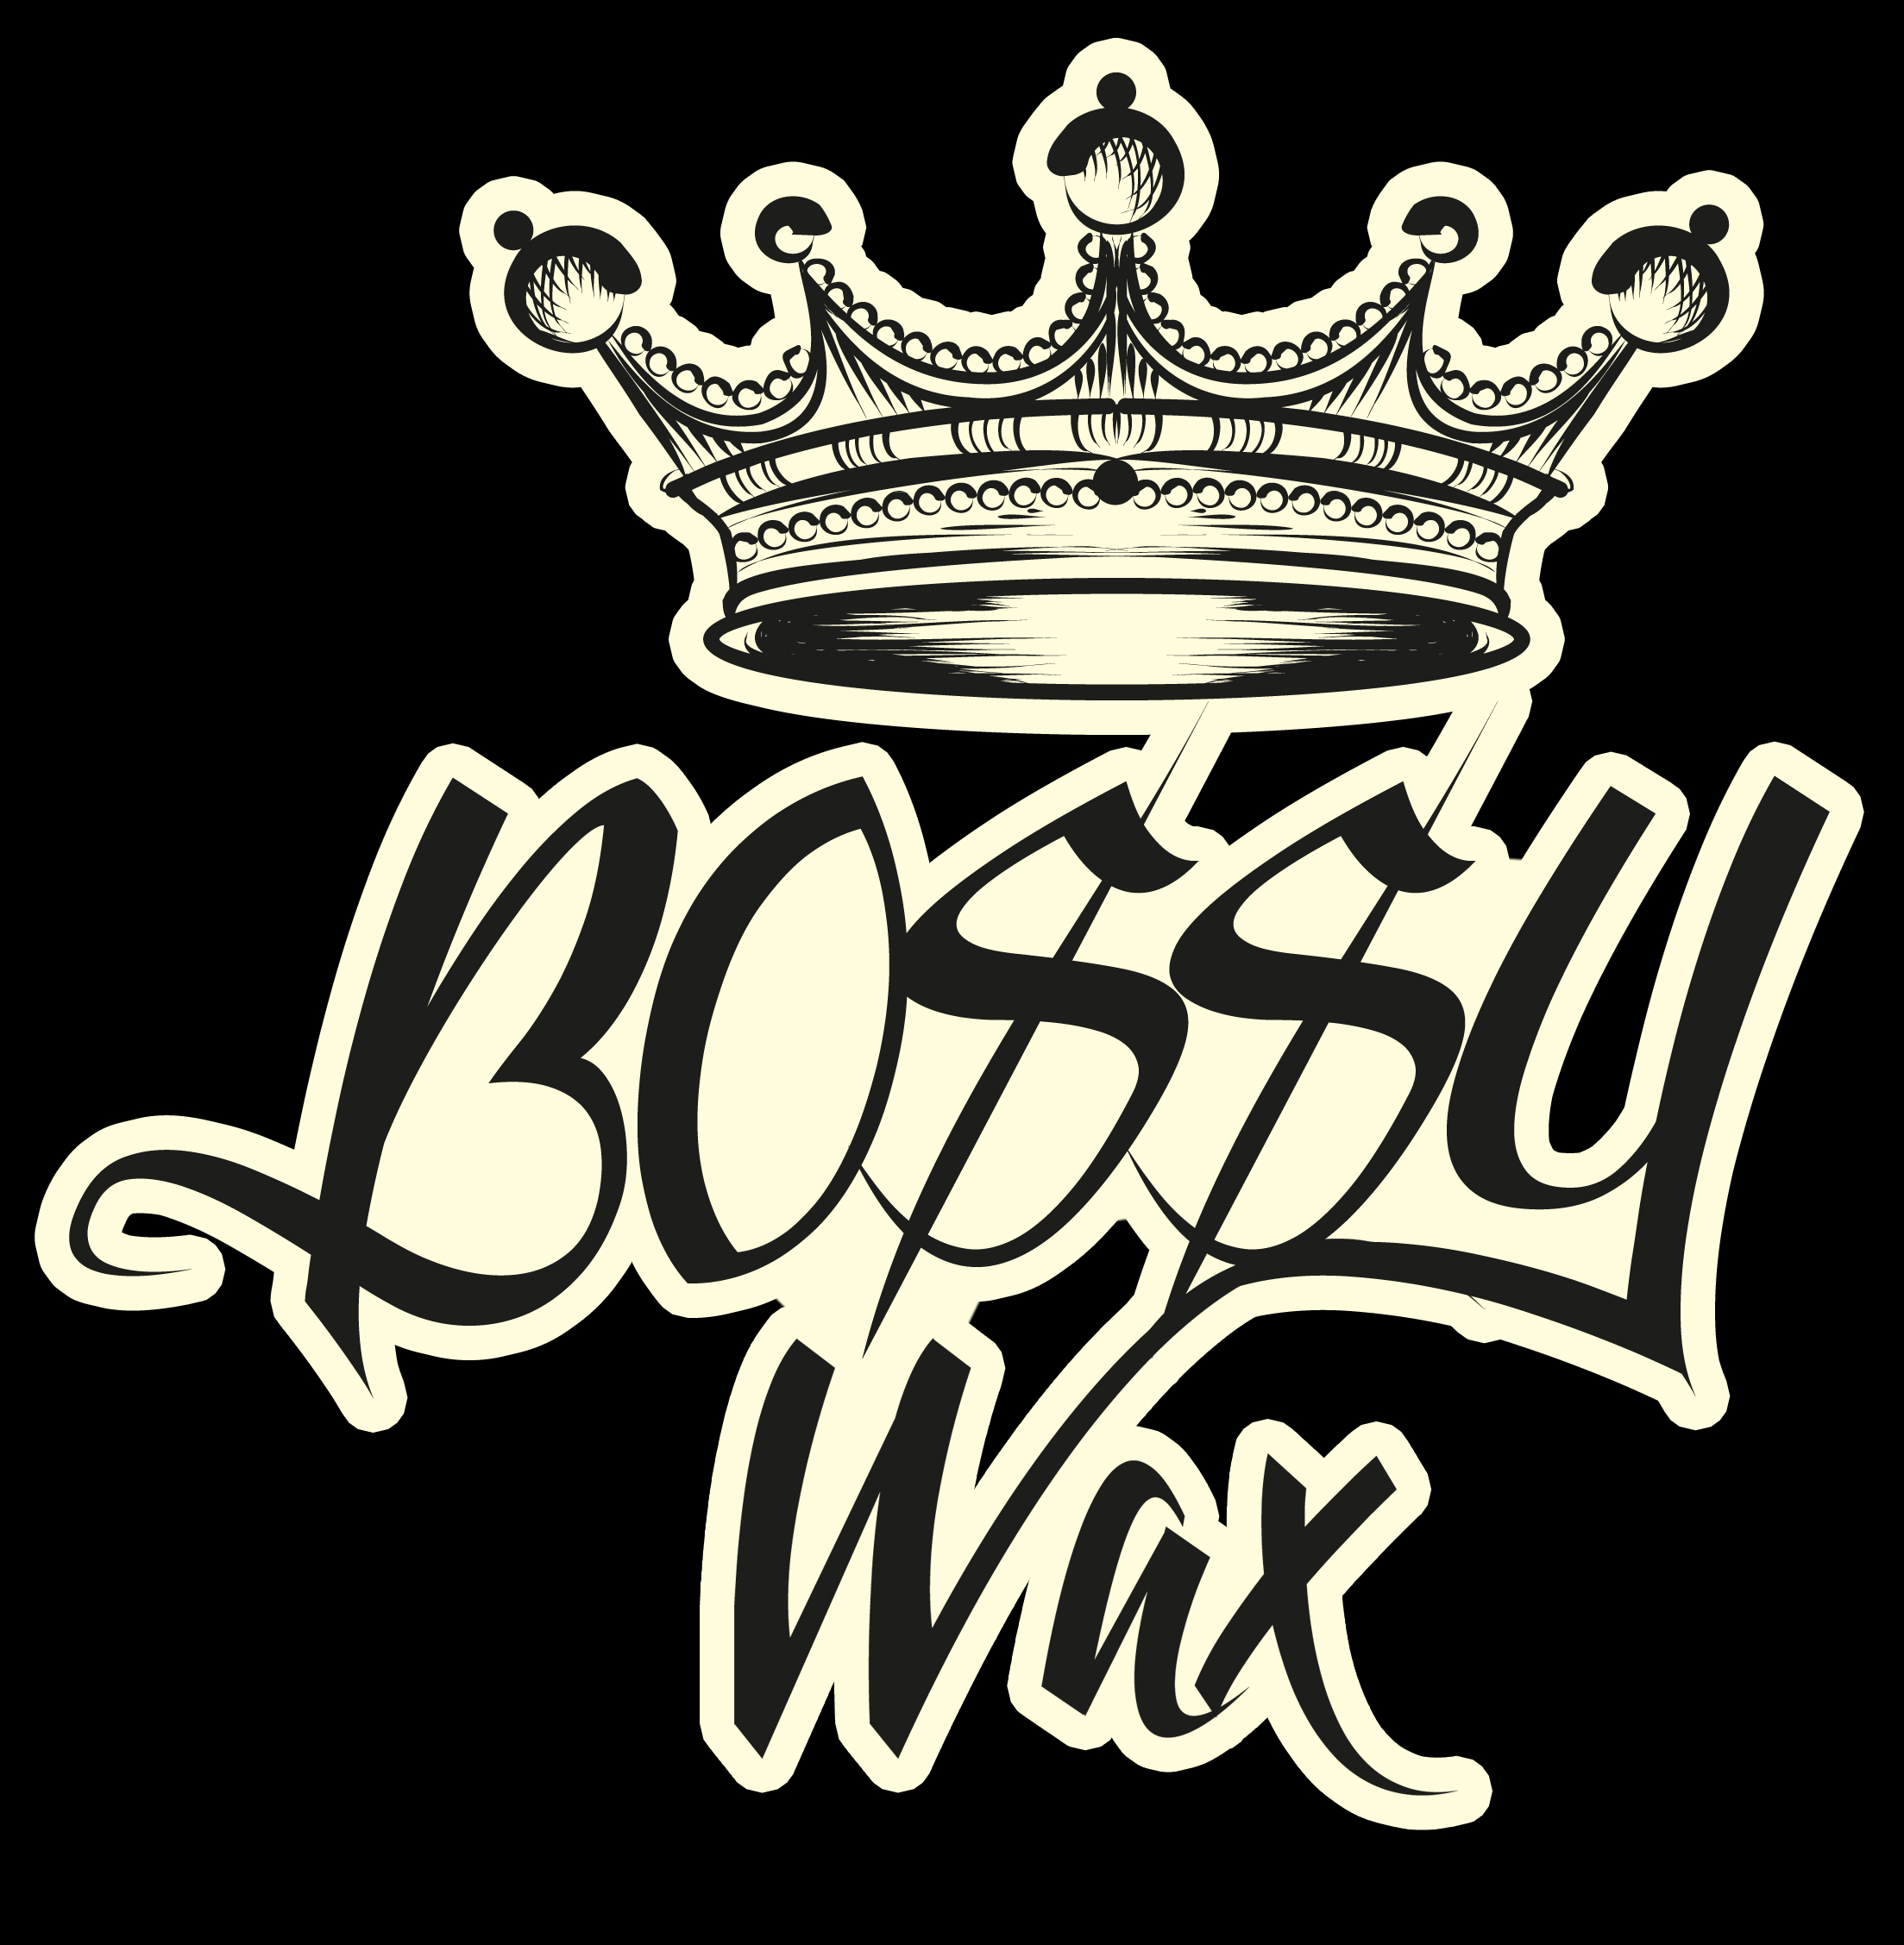 Bossy Wax